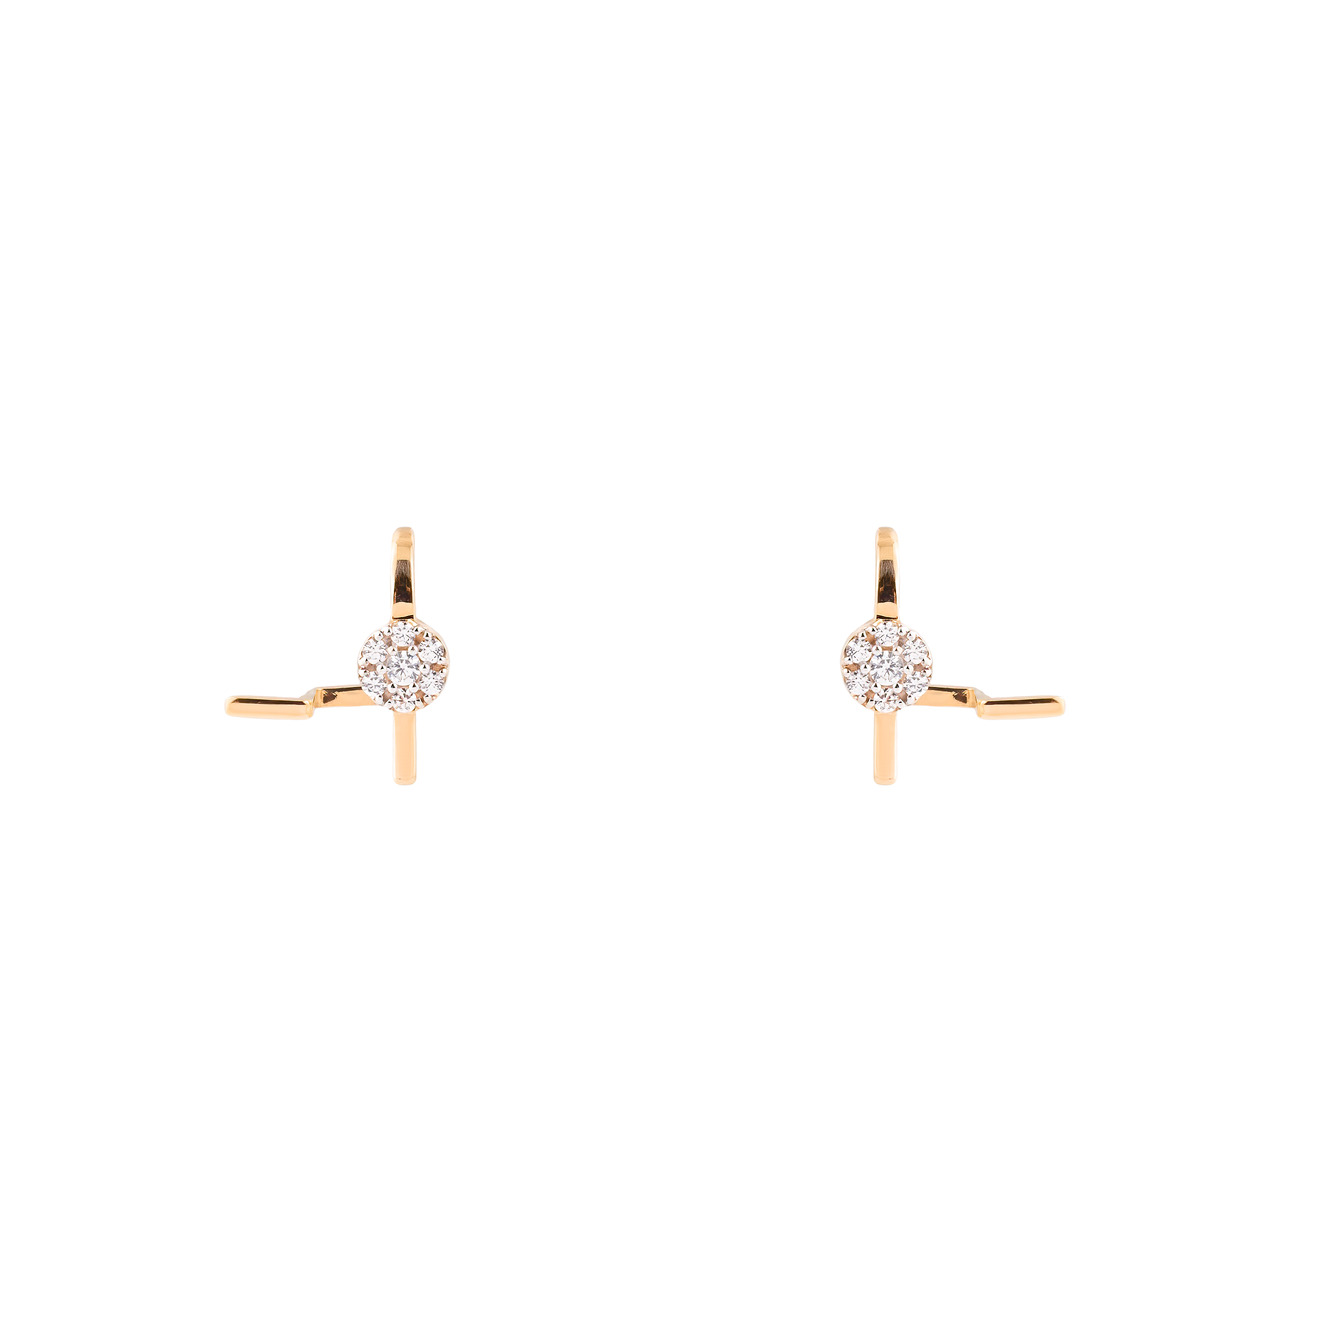 Herald Percy Diamonds Золотые серьги-клаймберы с крупным кристаллом herald percy серьги с прозрачным крупным кристаллом и паве